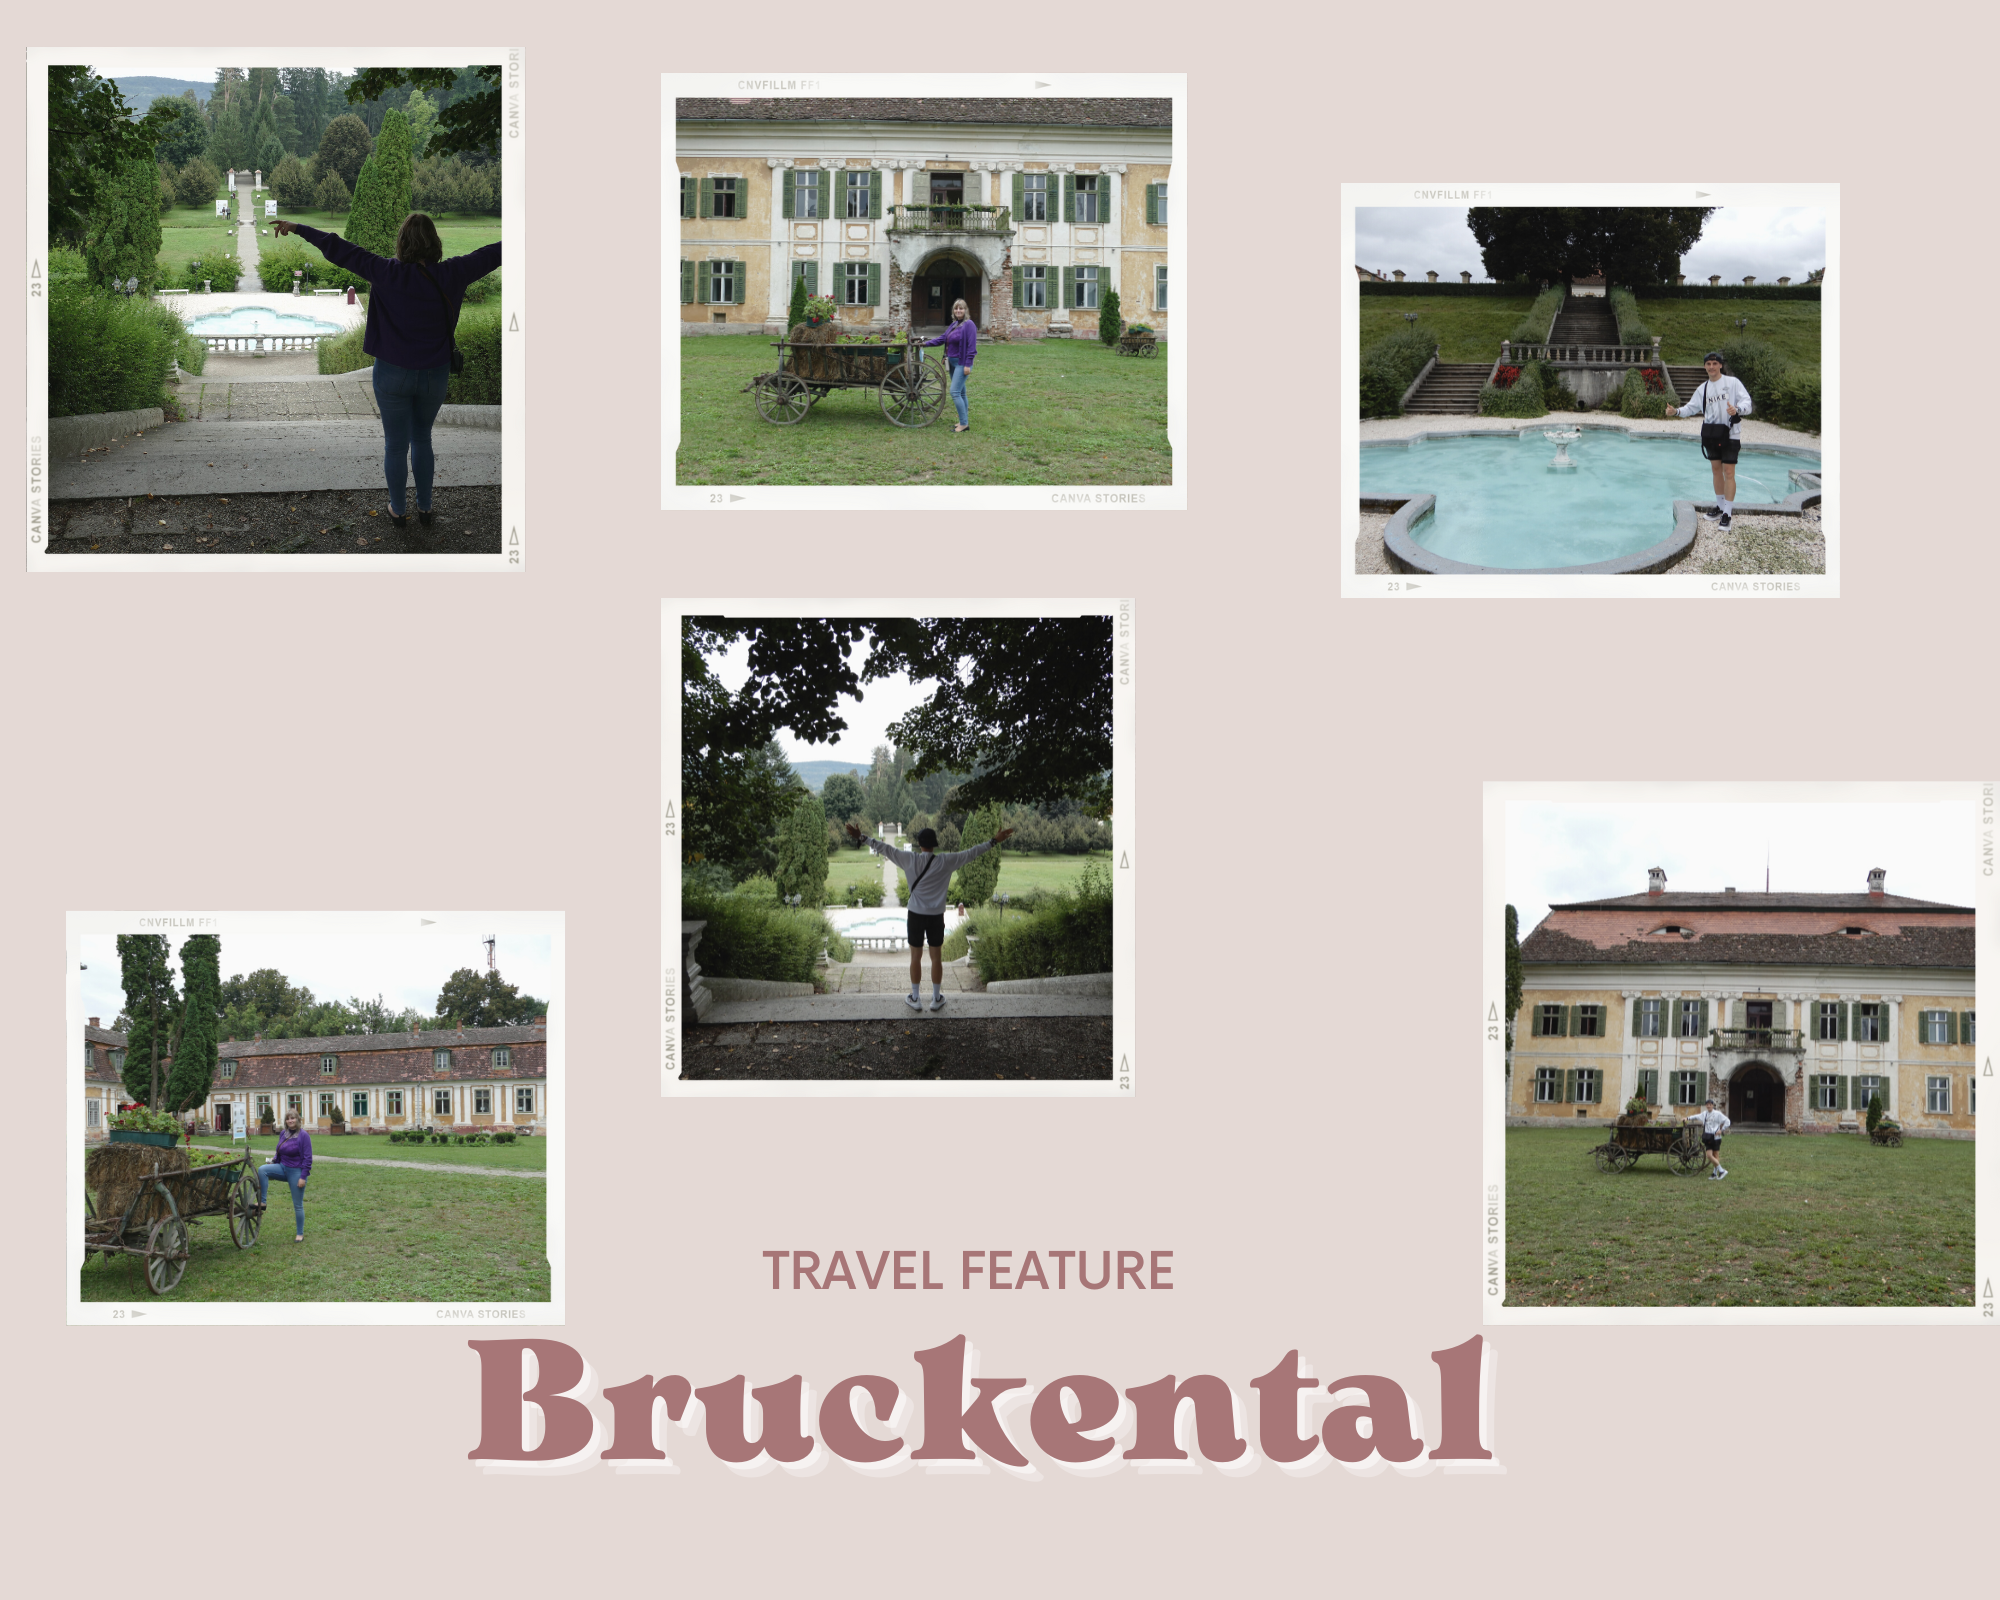 Bruckental